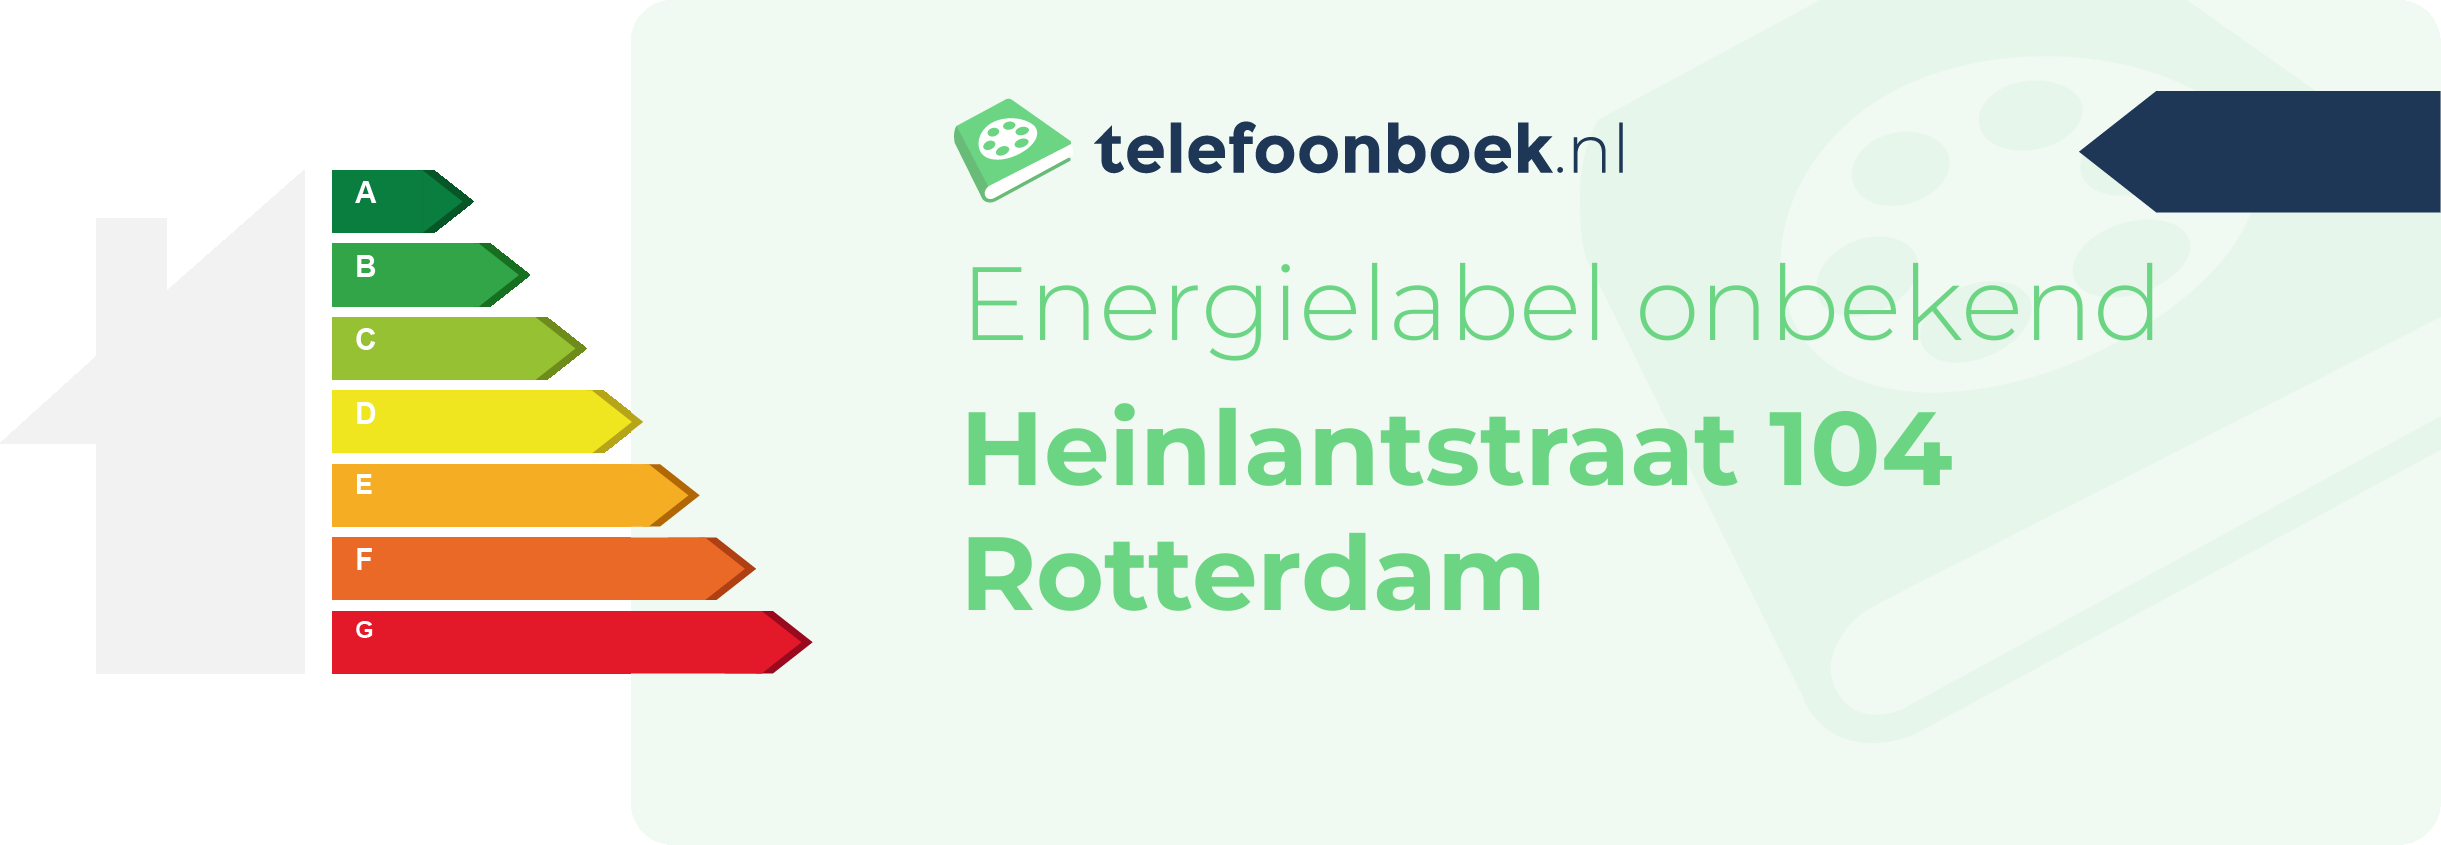 Energielabel Heinlantstraat 104 Rotterdam